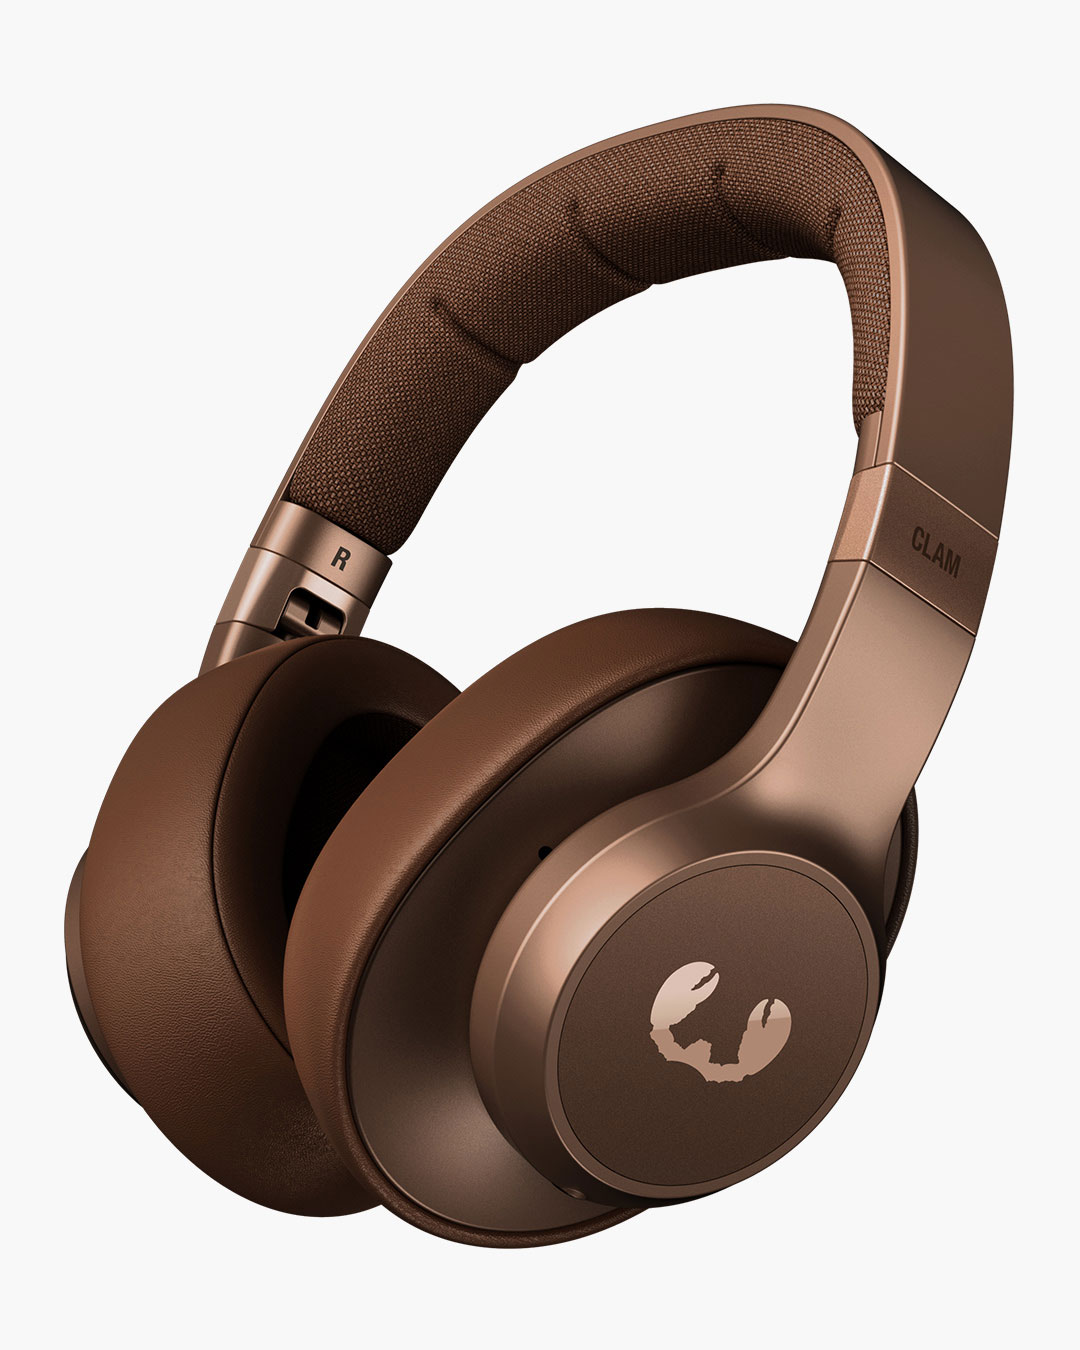 Fresh 'n Rebel - Clam - Wireless over-ear headphones - Brave Bronze